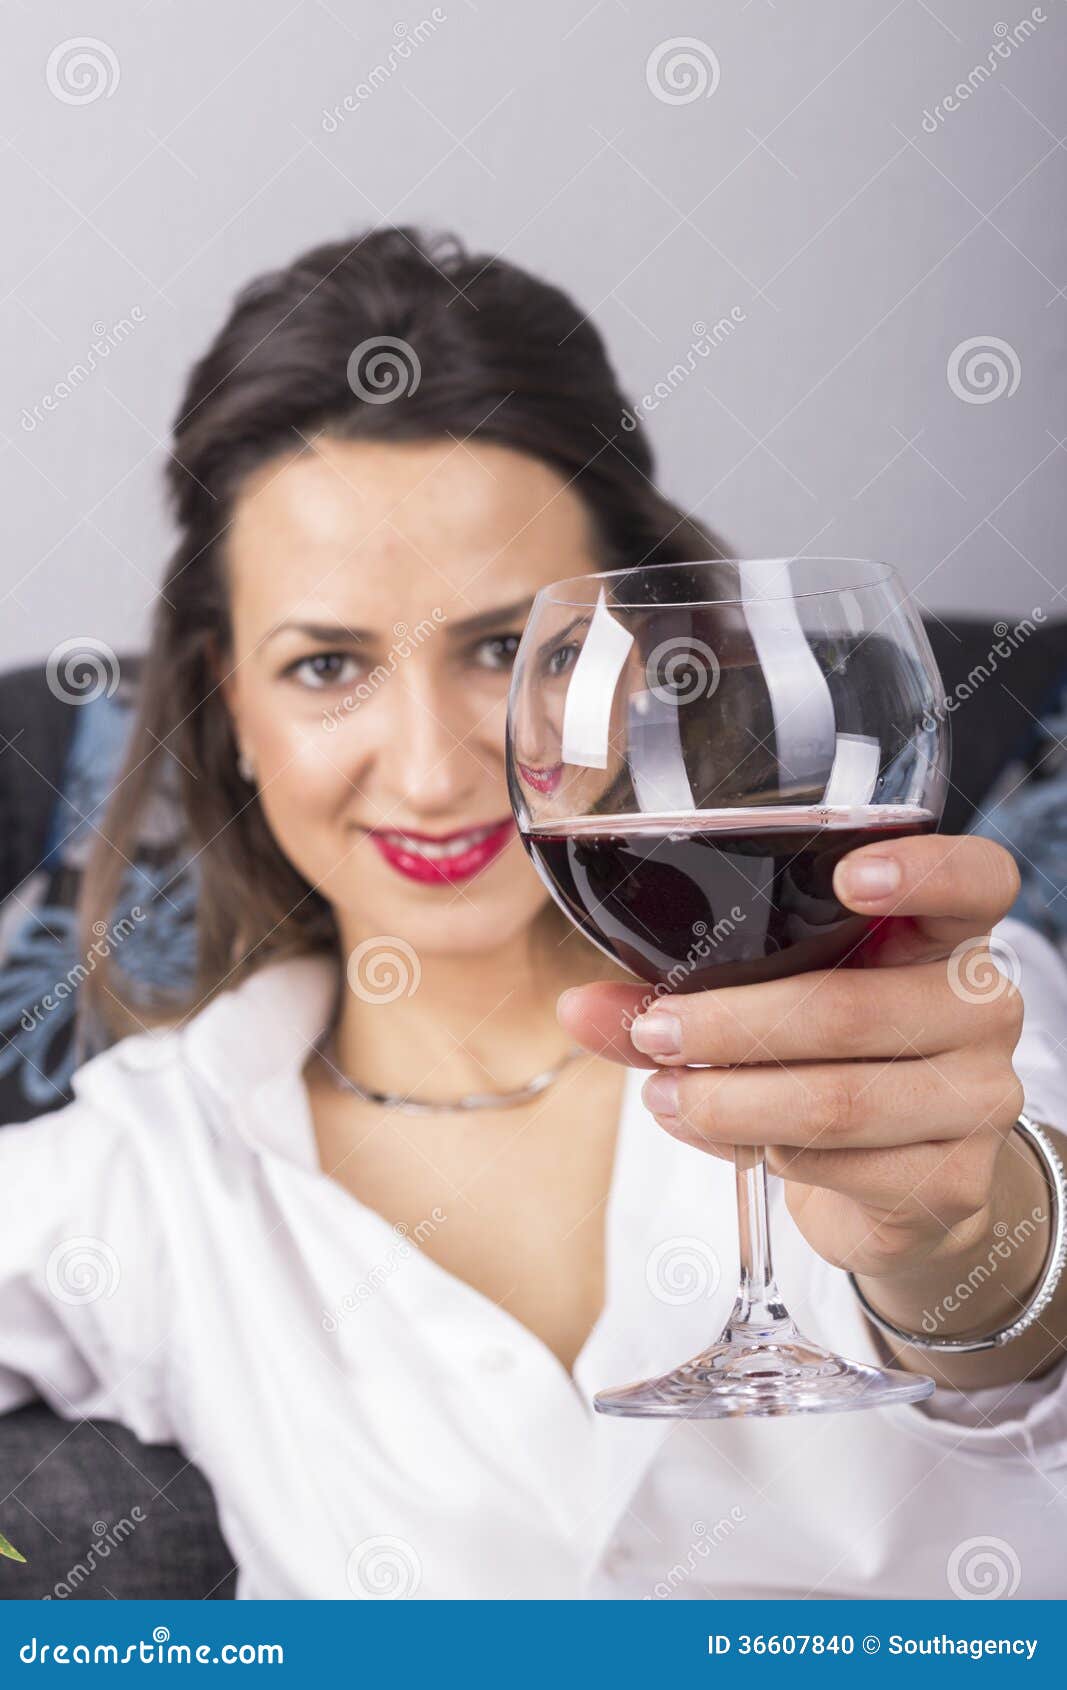 Beautiful Woman Drinking Wine Sitting on a Sofa Stock Photo - Image of ...